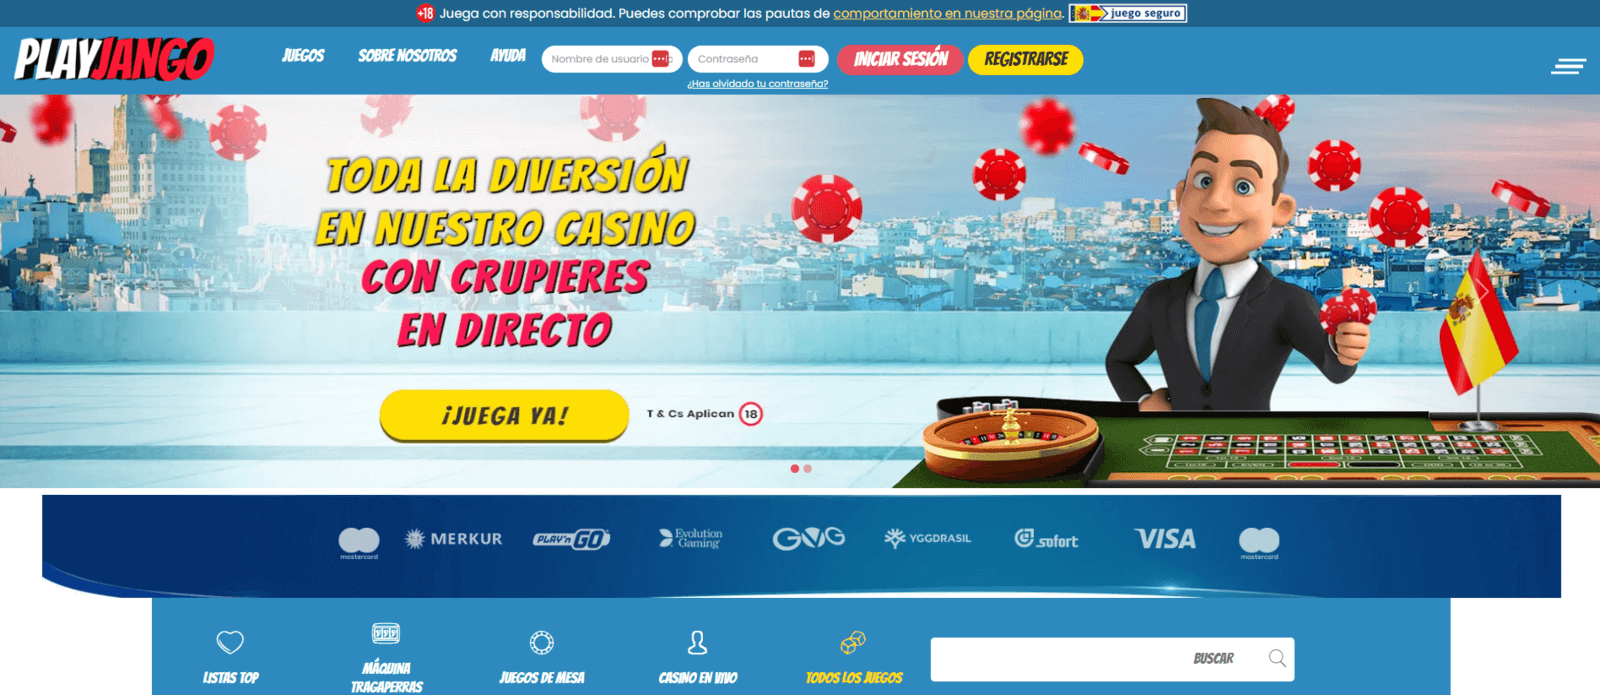 PlayJango casino en vivo online en España